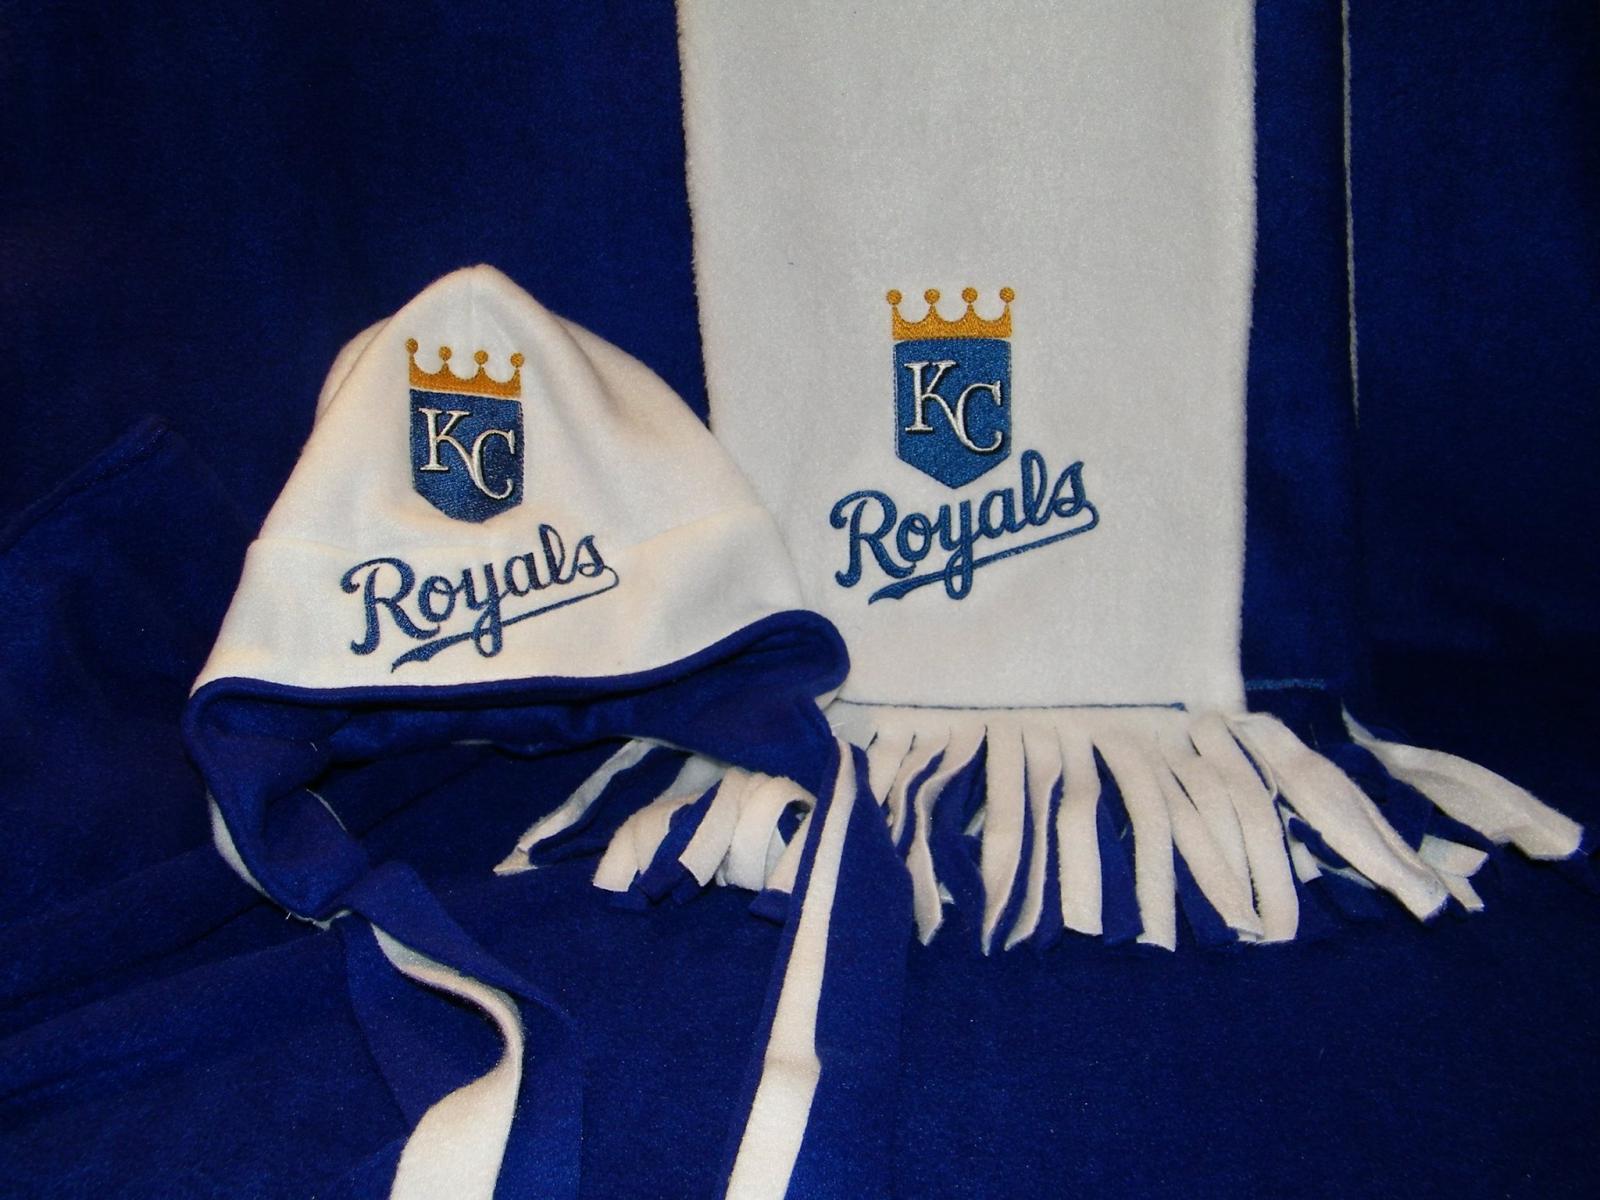 Kansas City Royals logo machine embroidery design